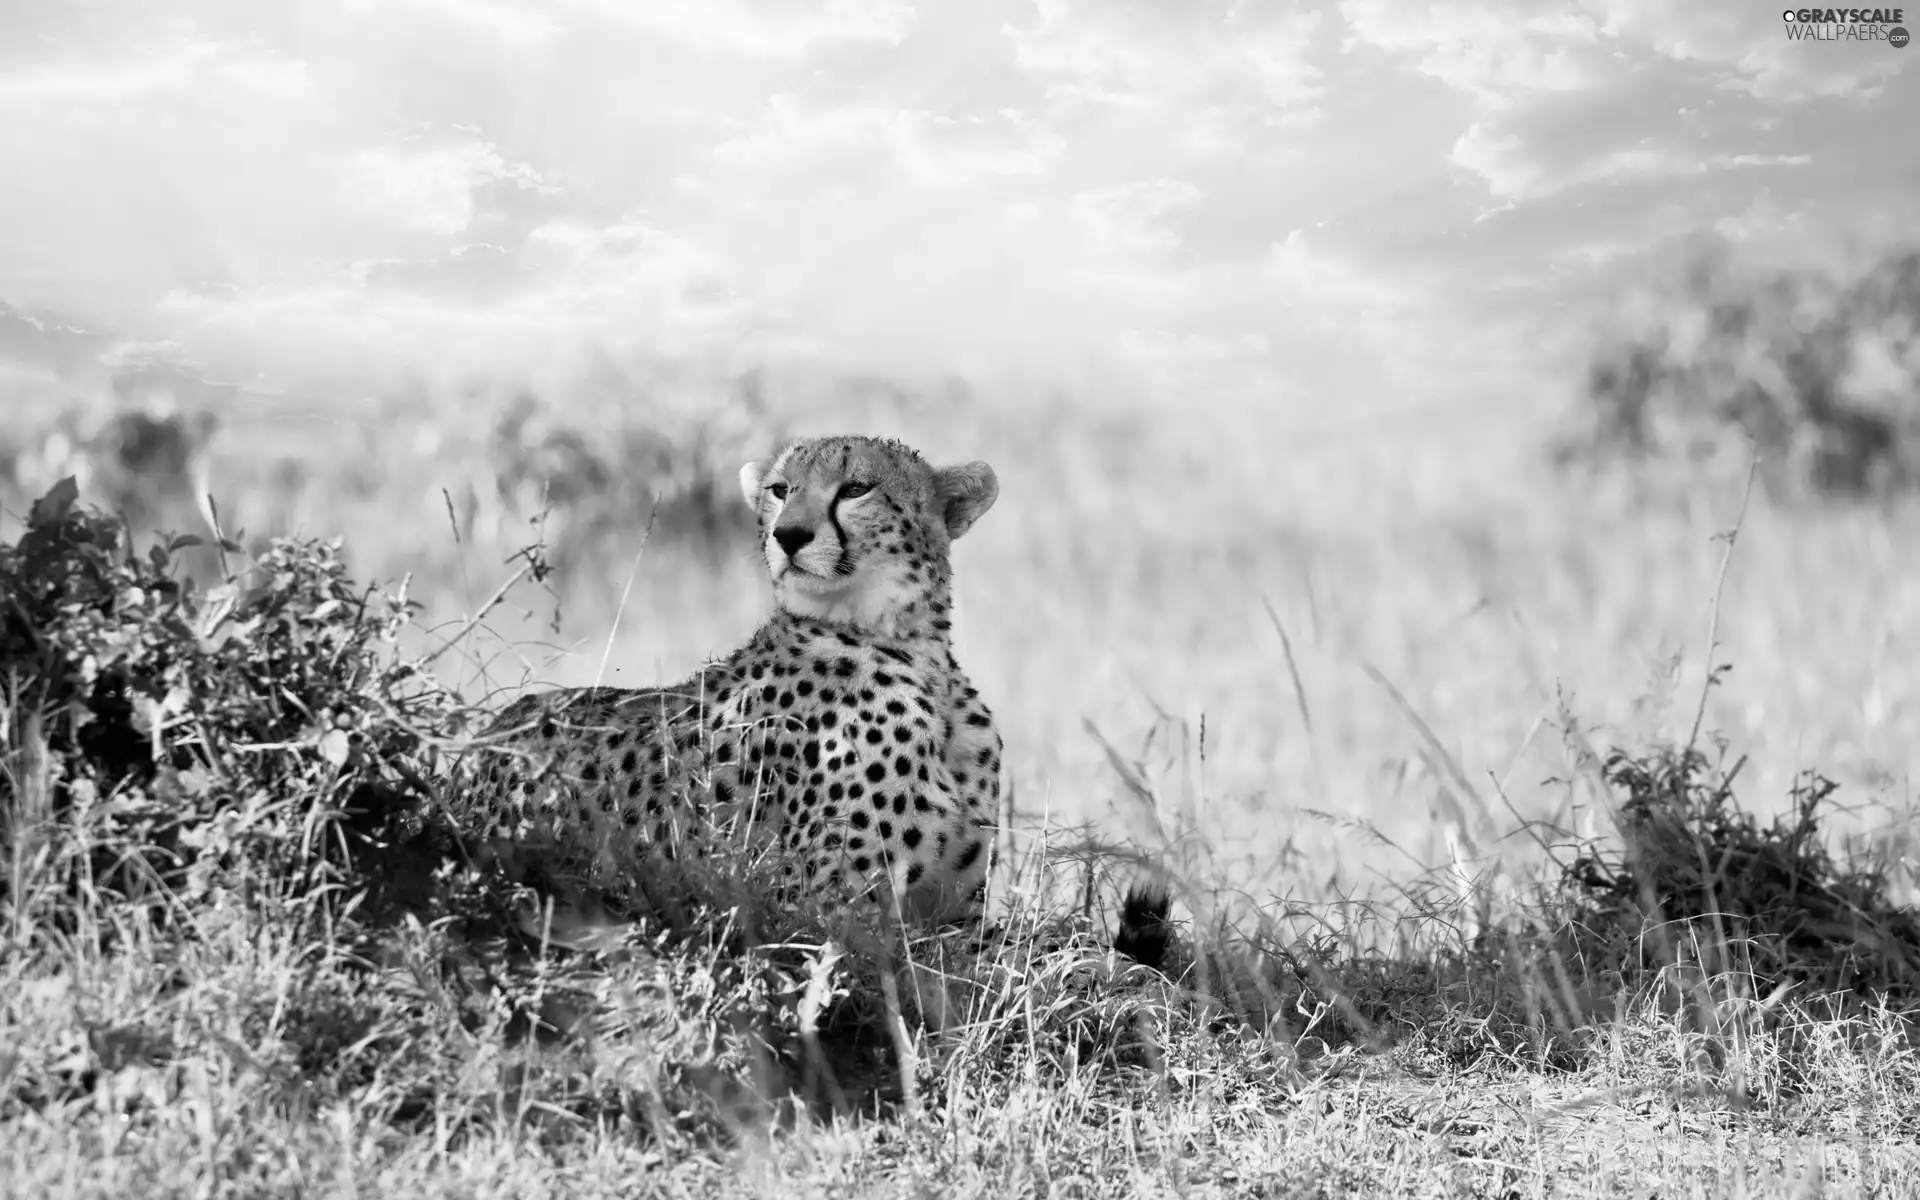 Cheetah, grass